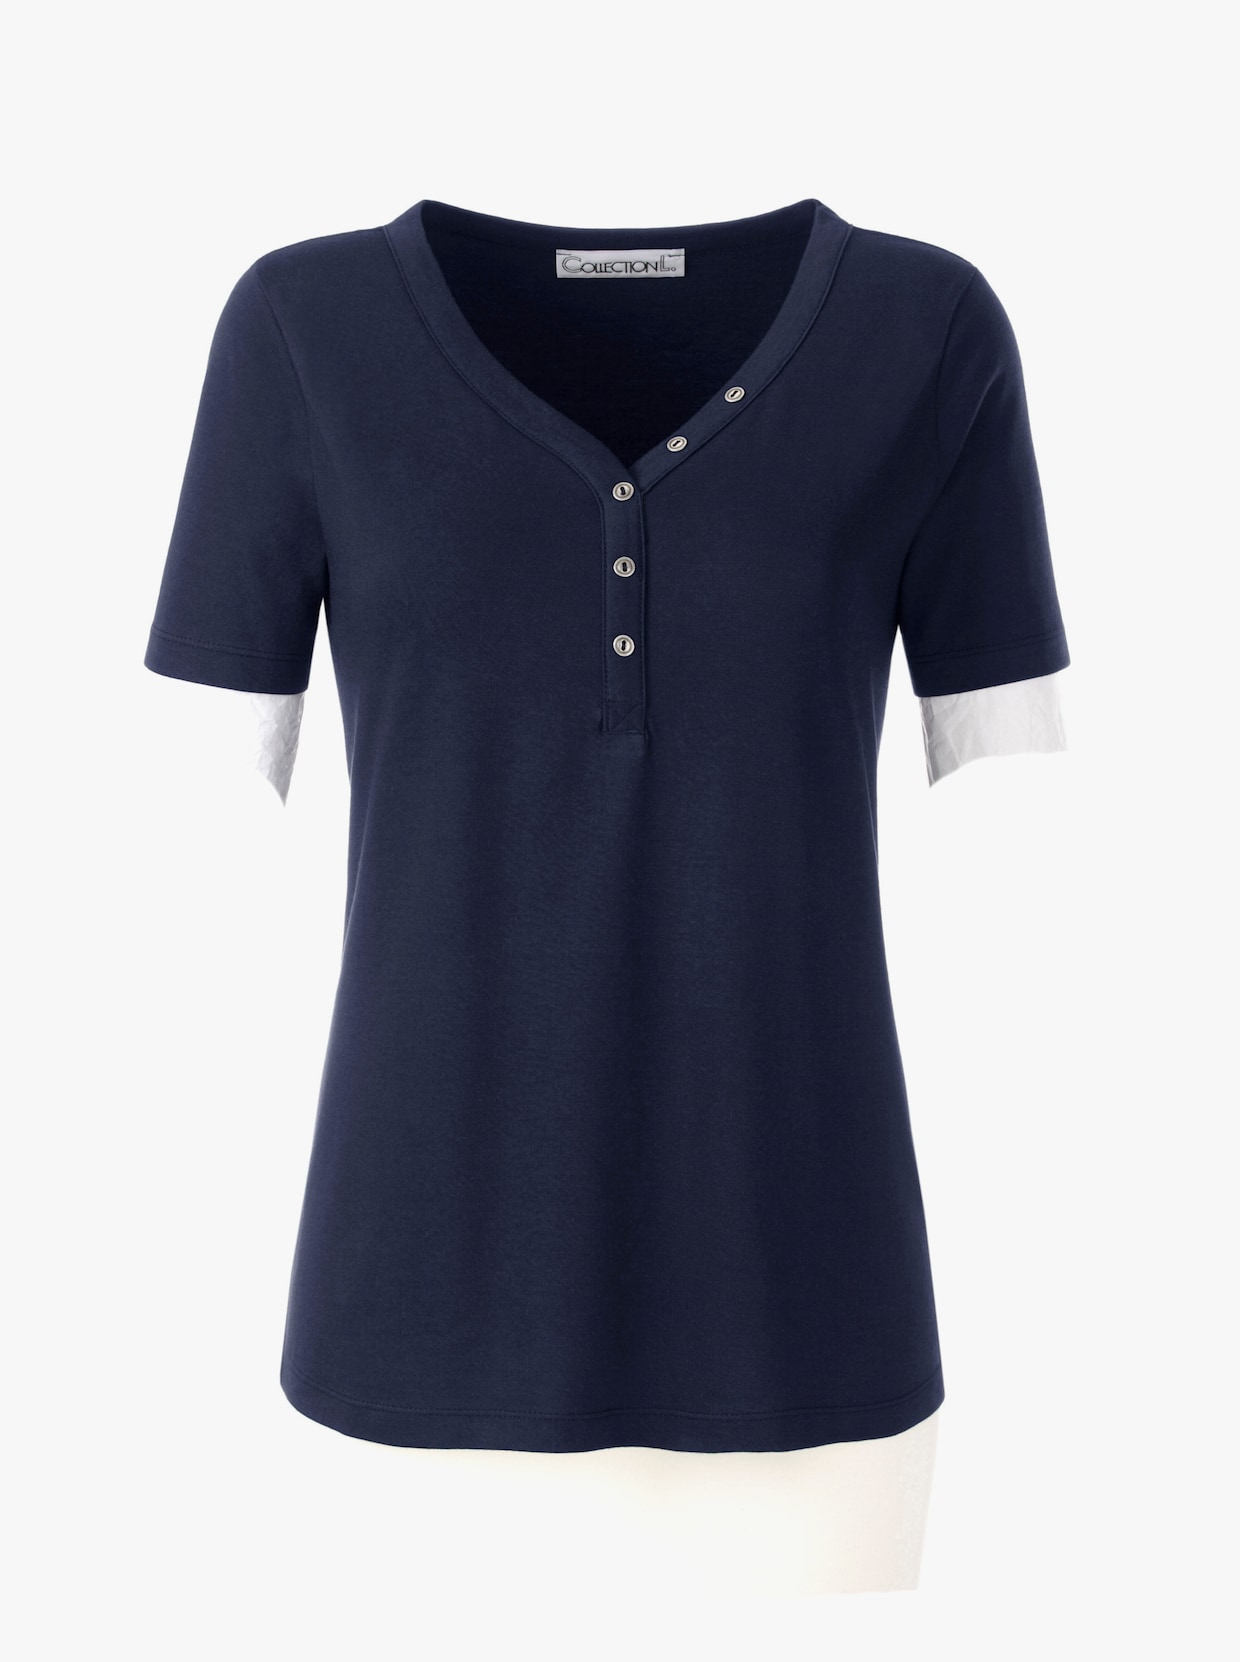 Tričko s krátkým rukávem - námořnická modrá